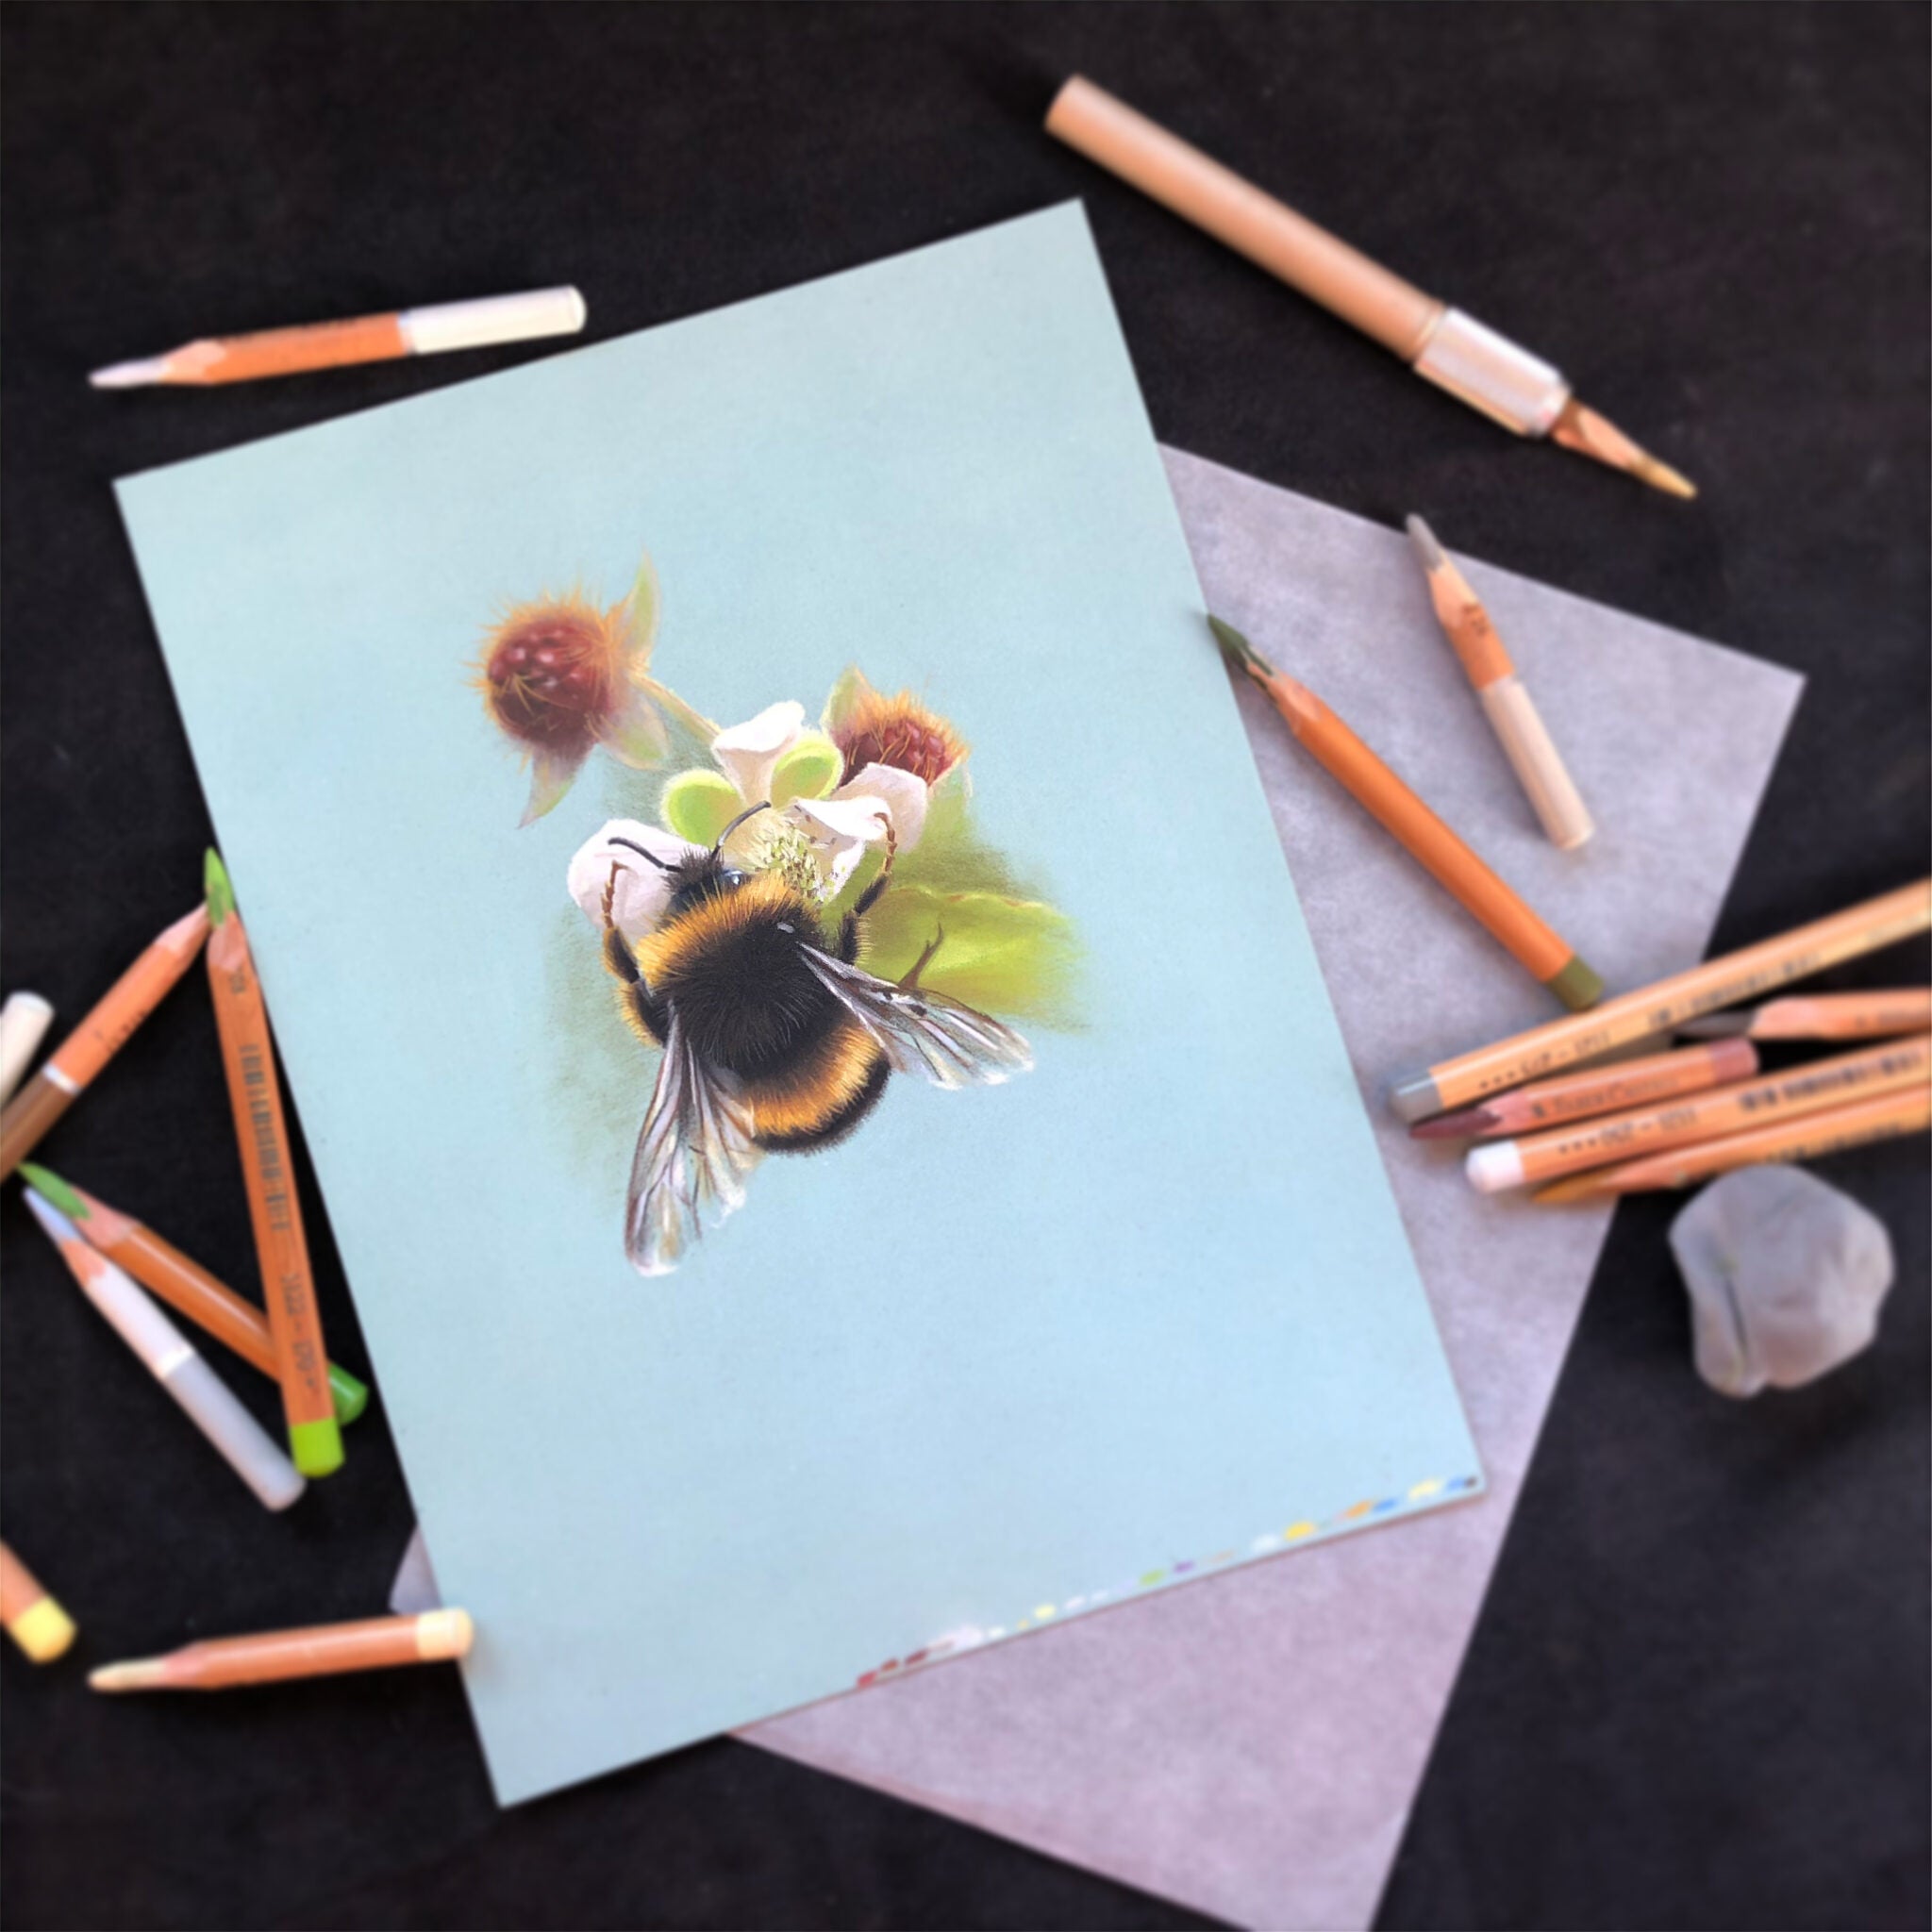 Pastelmat: Best Pastel Paper? - The Artistic Gnome Blog